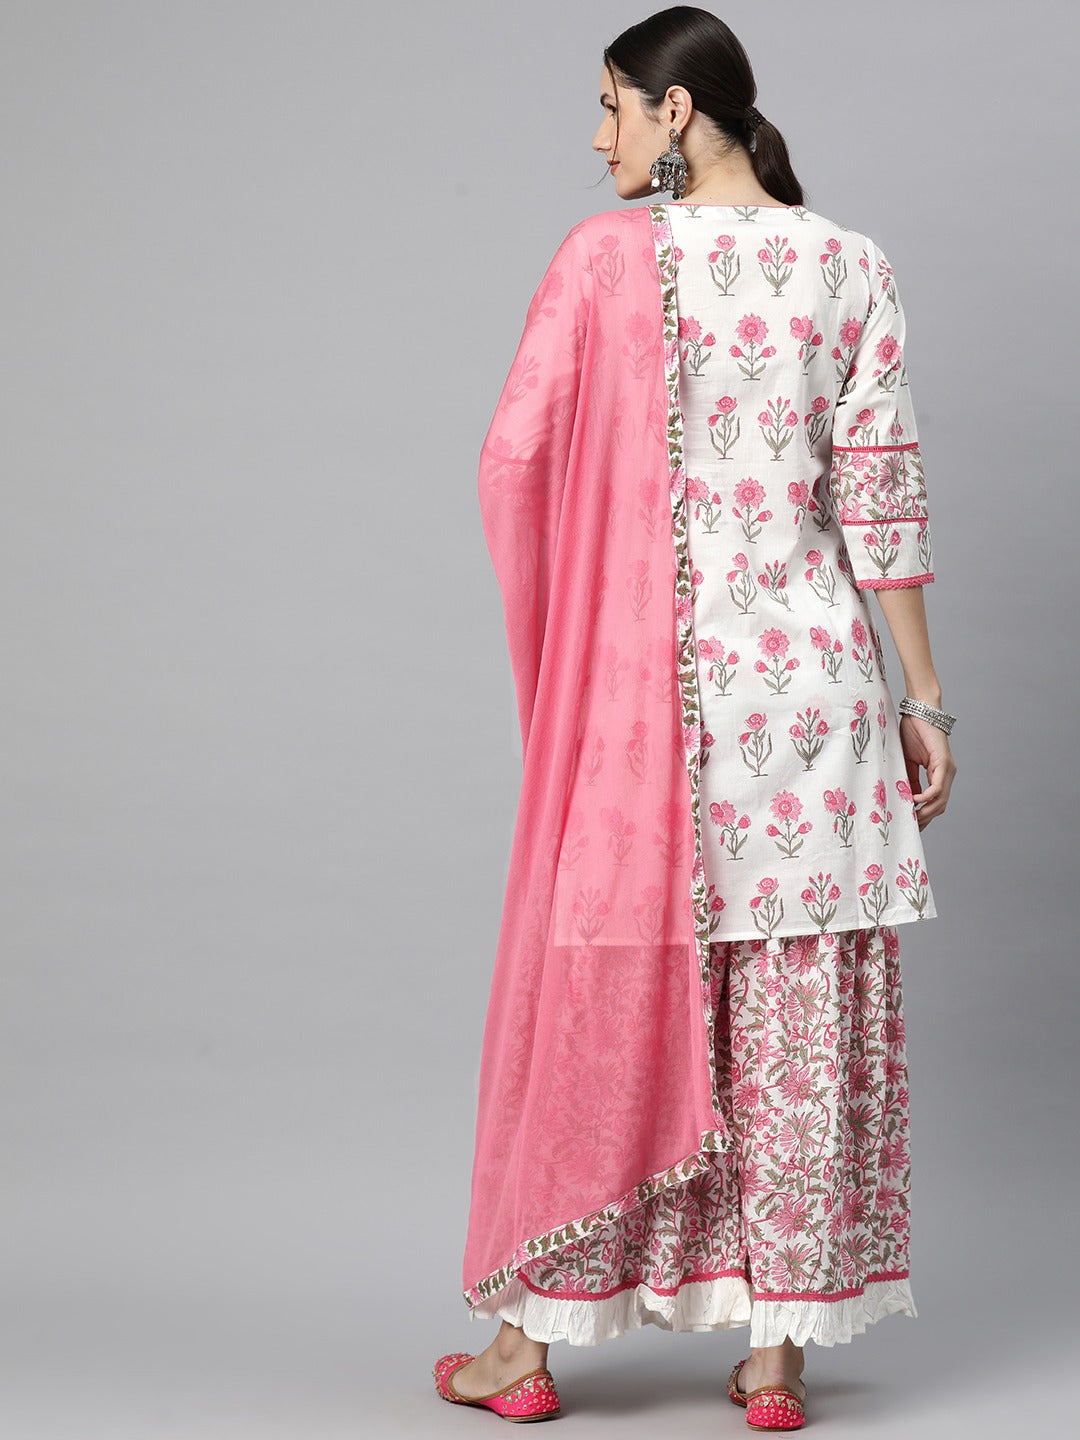 Straight Style Cotton Fabric Pink Colour Kurti With Bottom & Dupatta